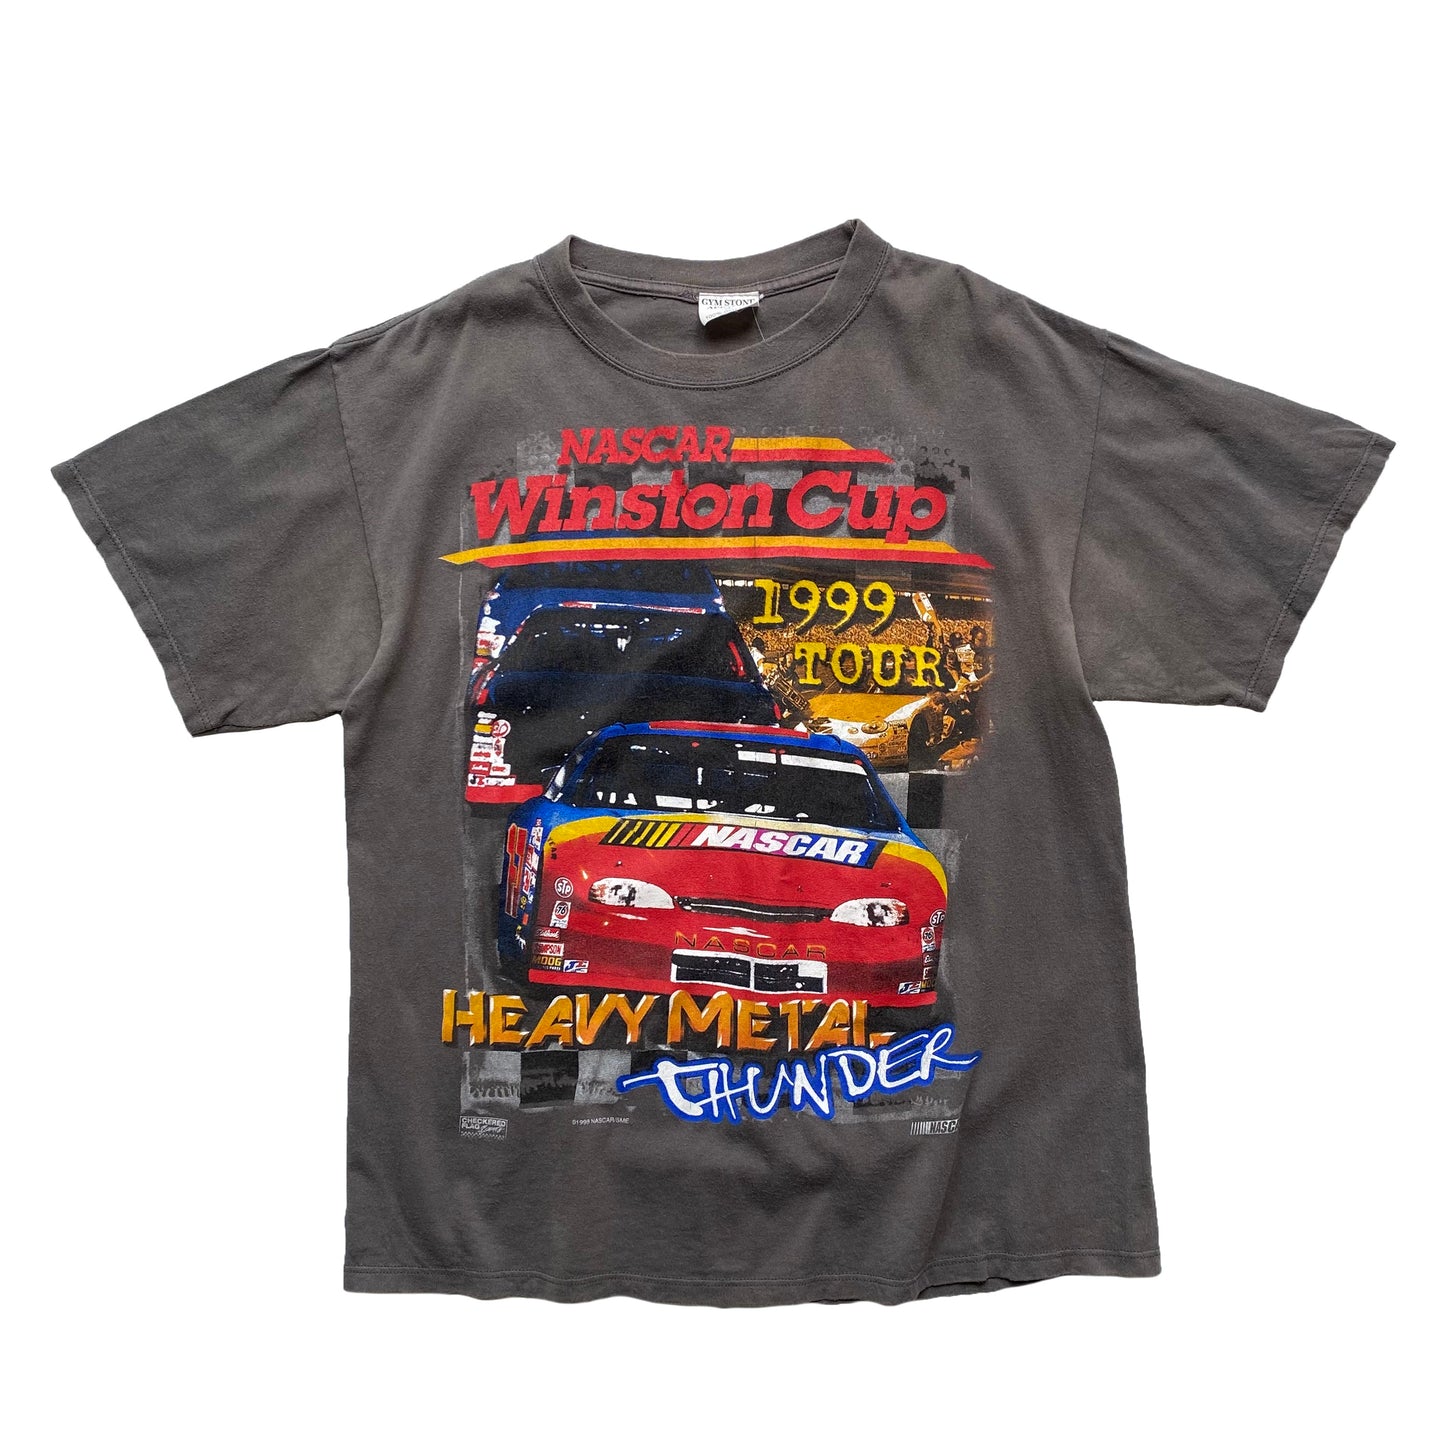 90's NASCAR "HEAVY METAL THUNDER" RACING T-SHIRT